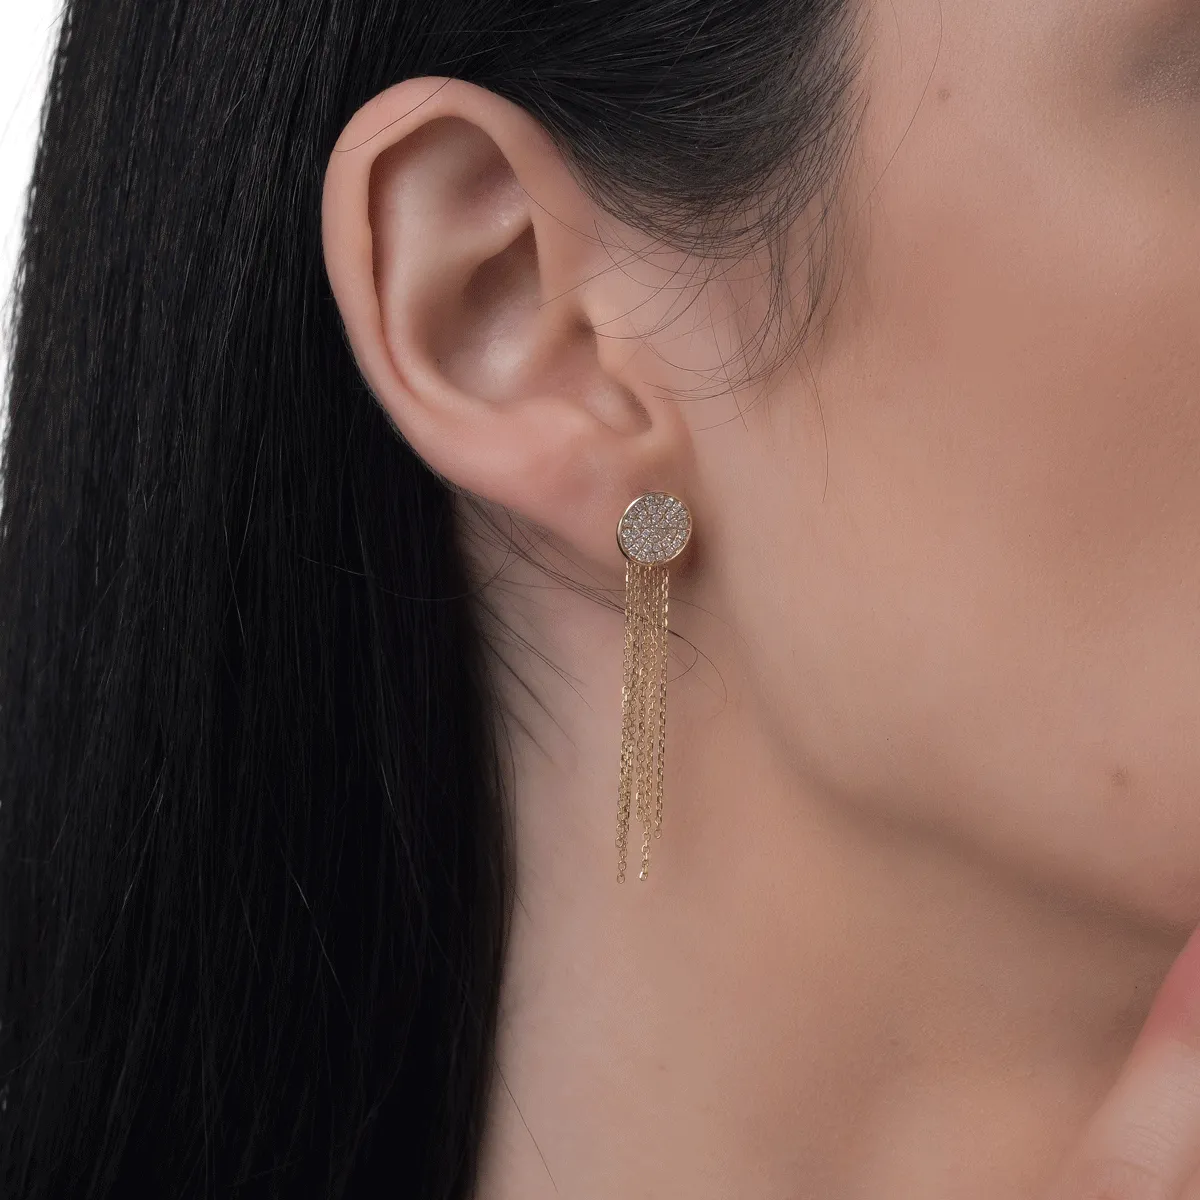 14K yellow gold earrings with 0.28ct diamonds